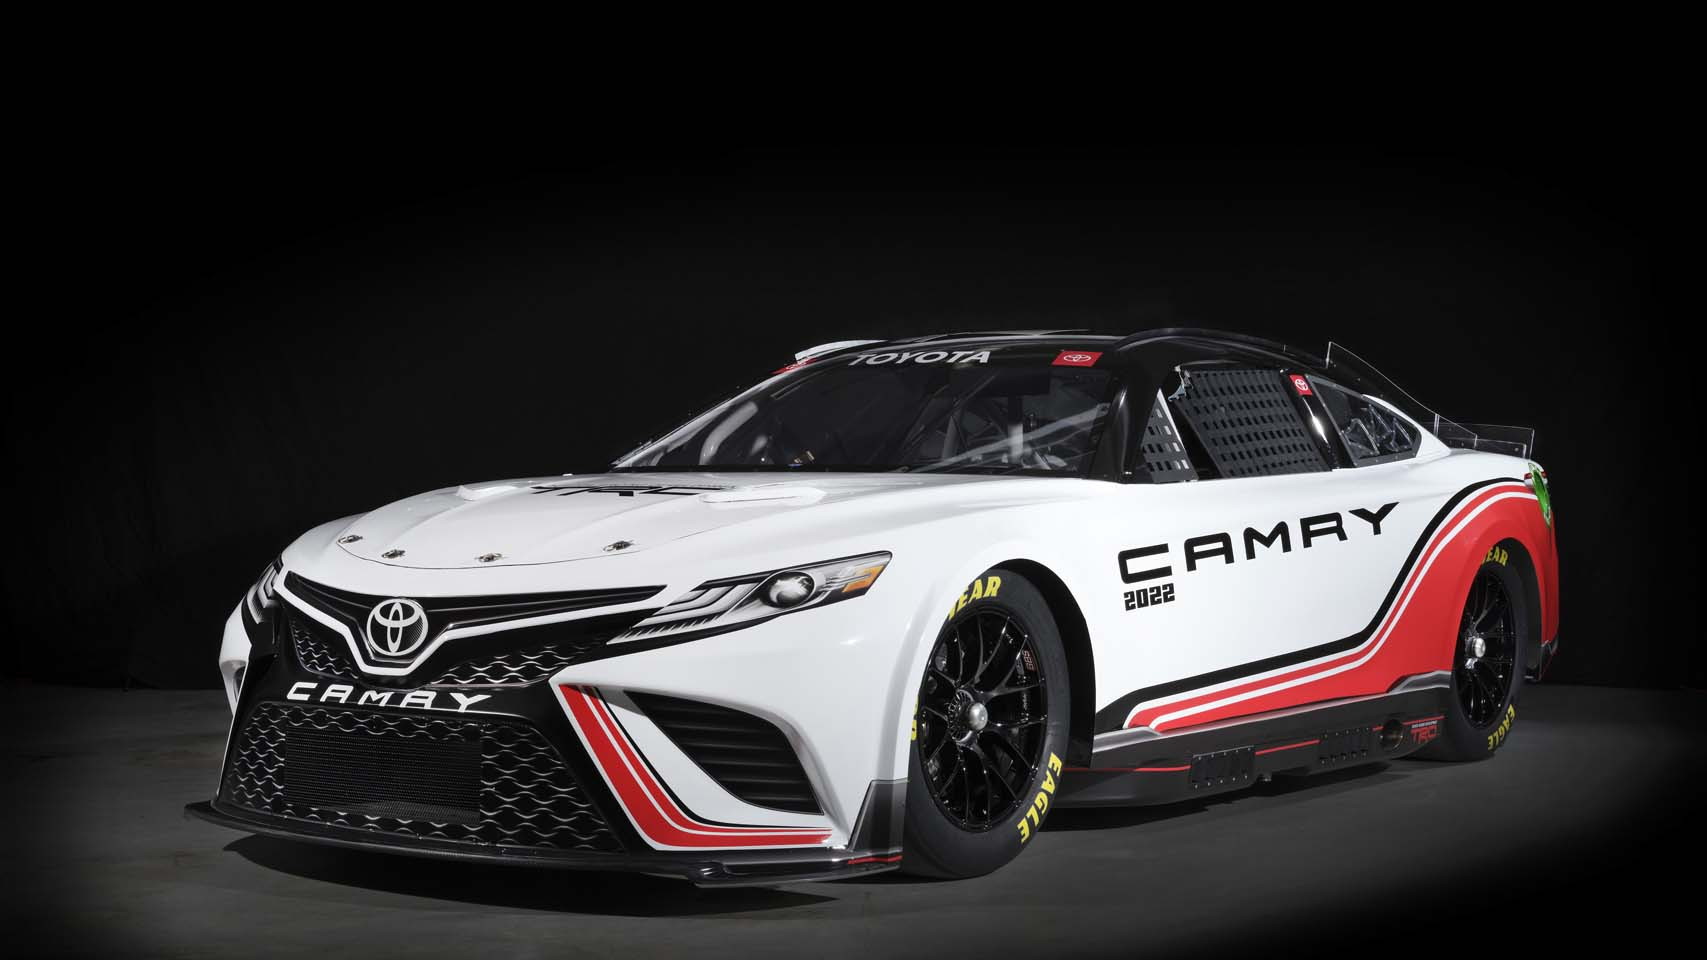 Toyota TRD Camry Next Gen NASCAR race car